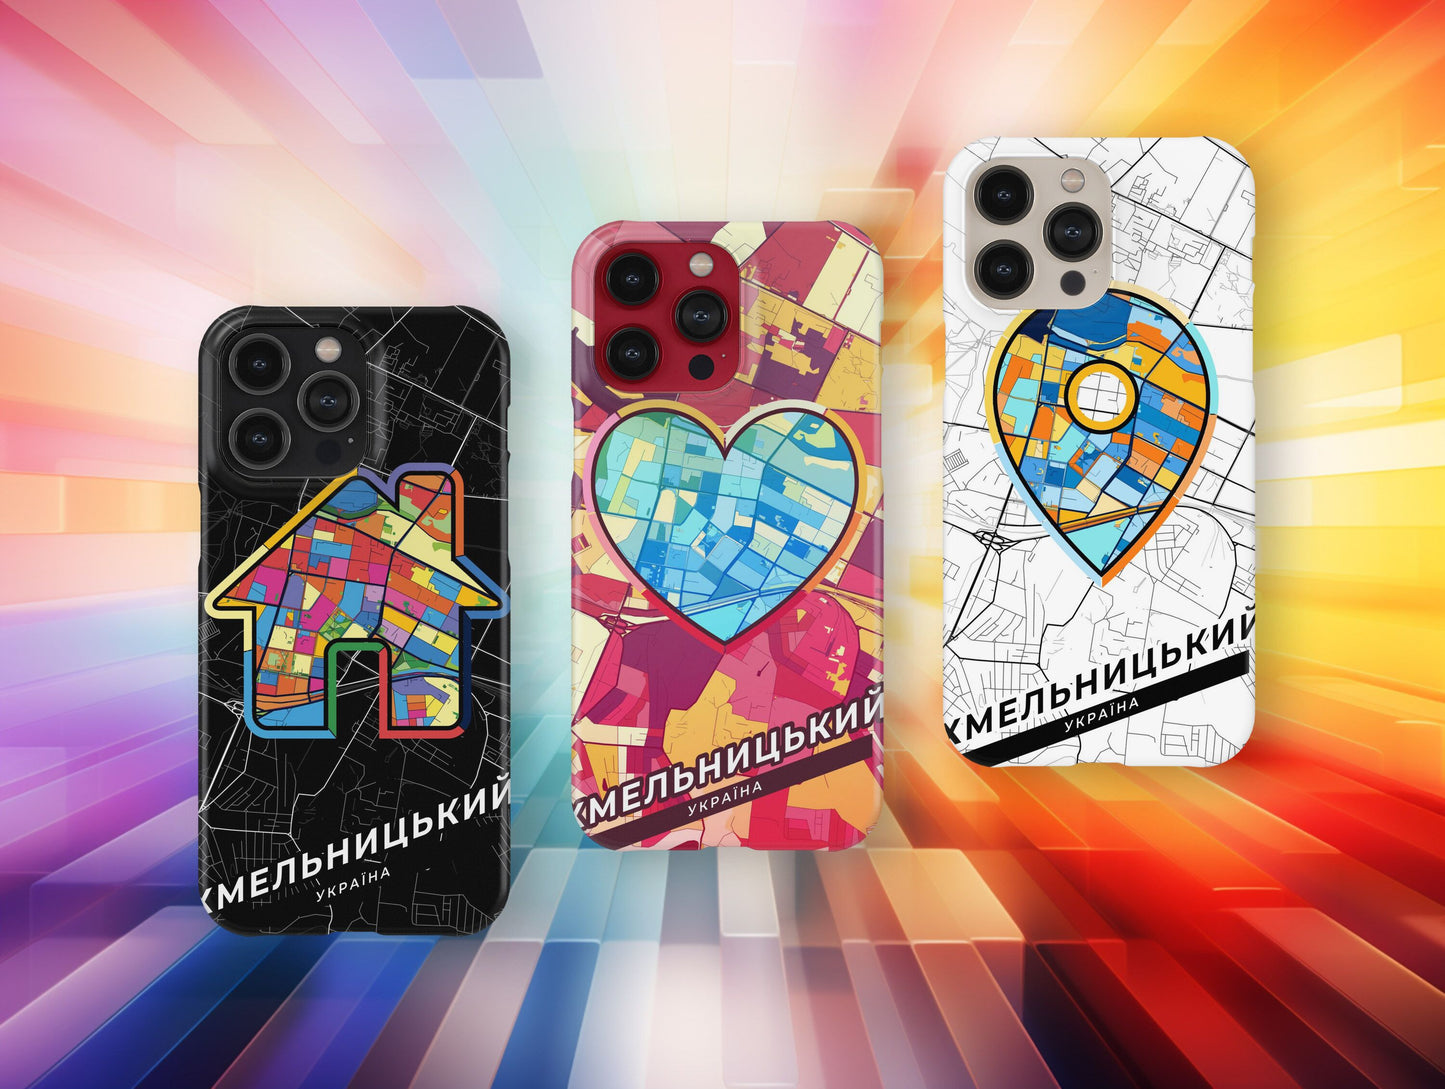 Khmelnytskyi Ukraine slim phone case with colorful icon. Birthday, wedding or housewarming gift. Couple match cases.